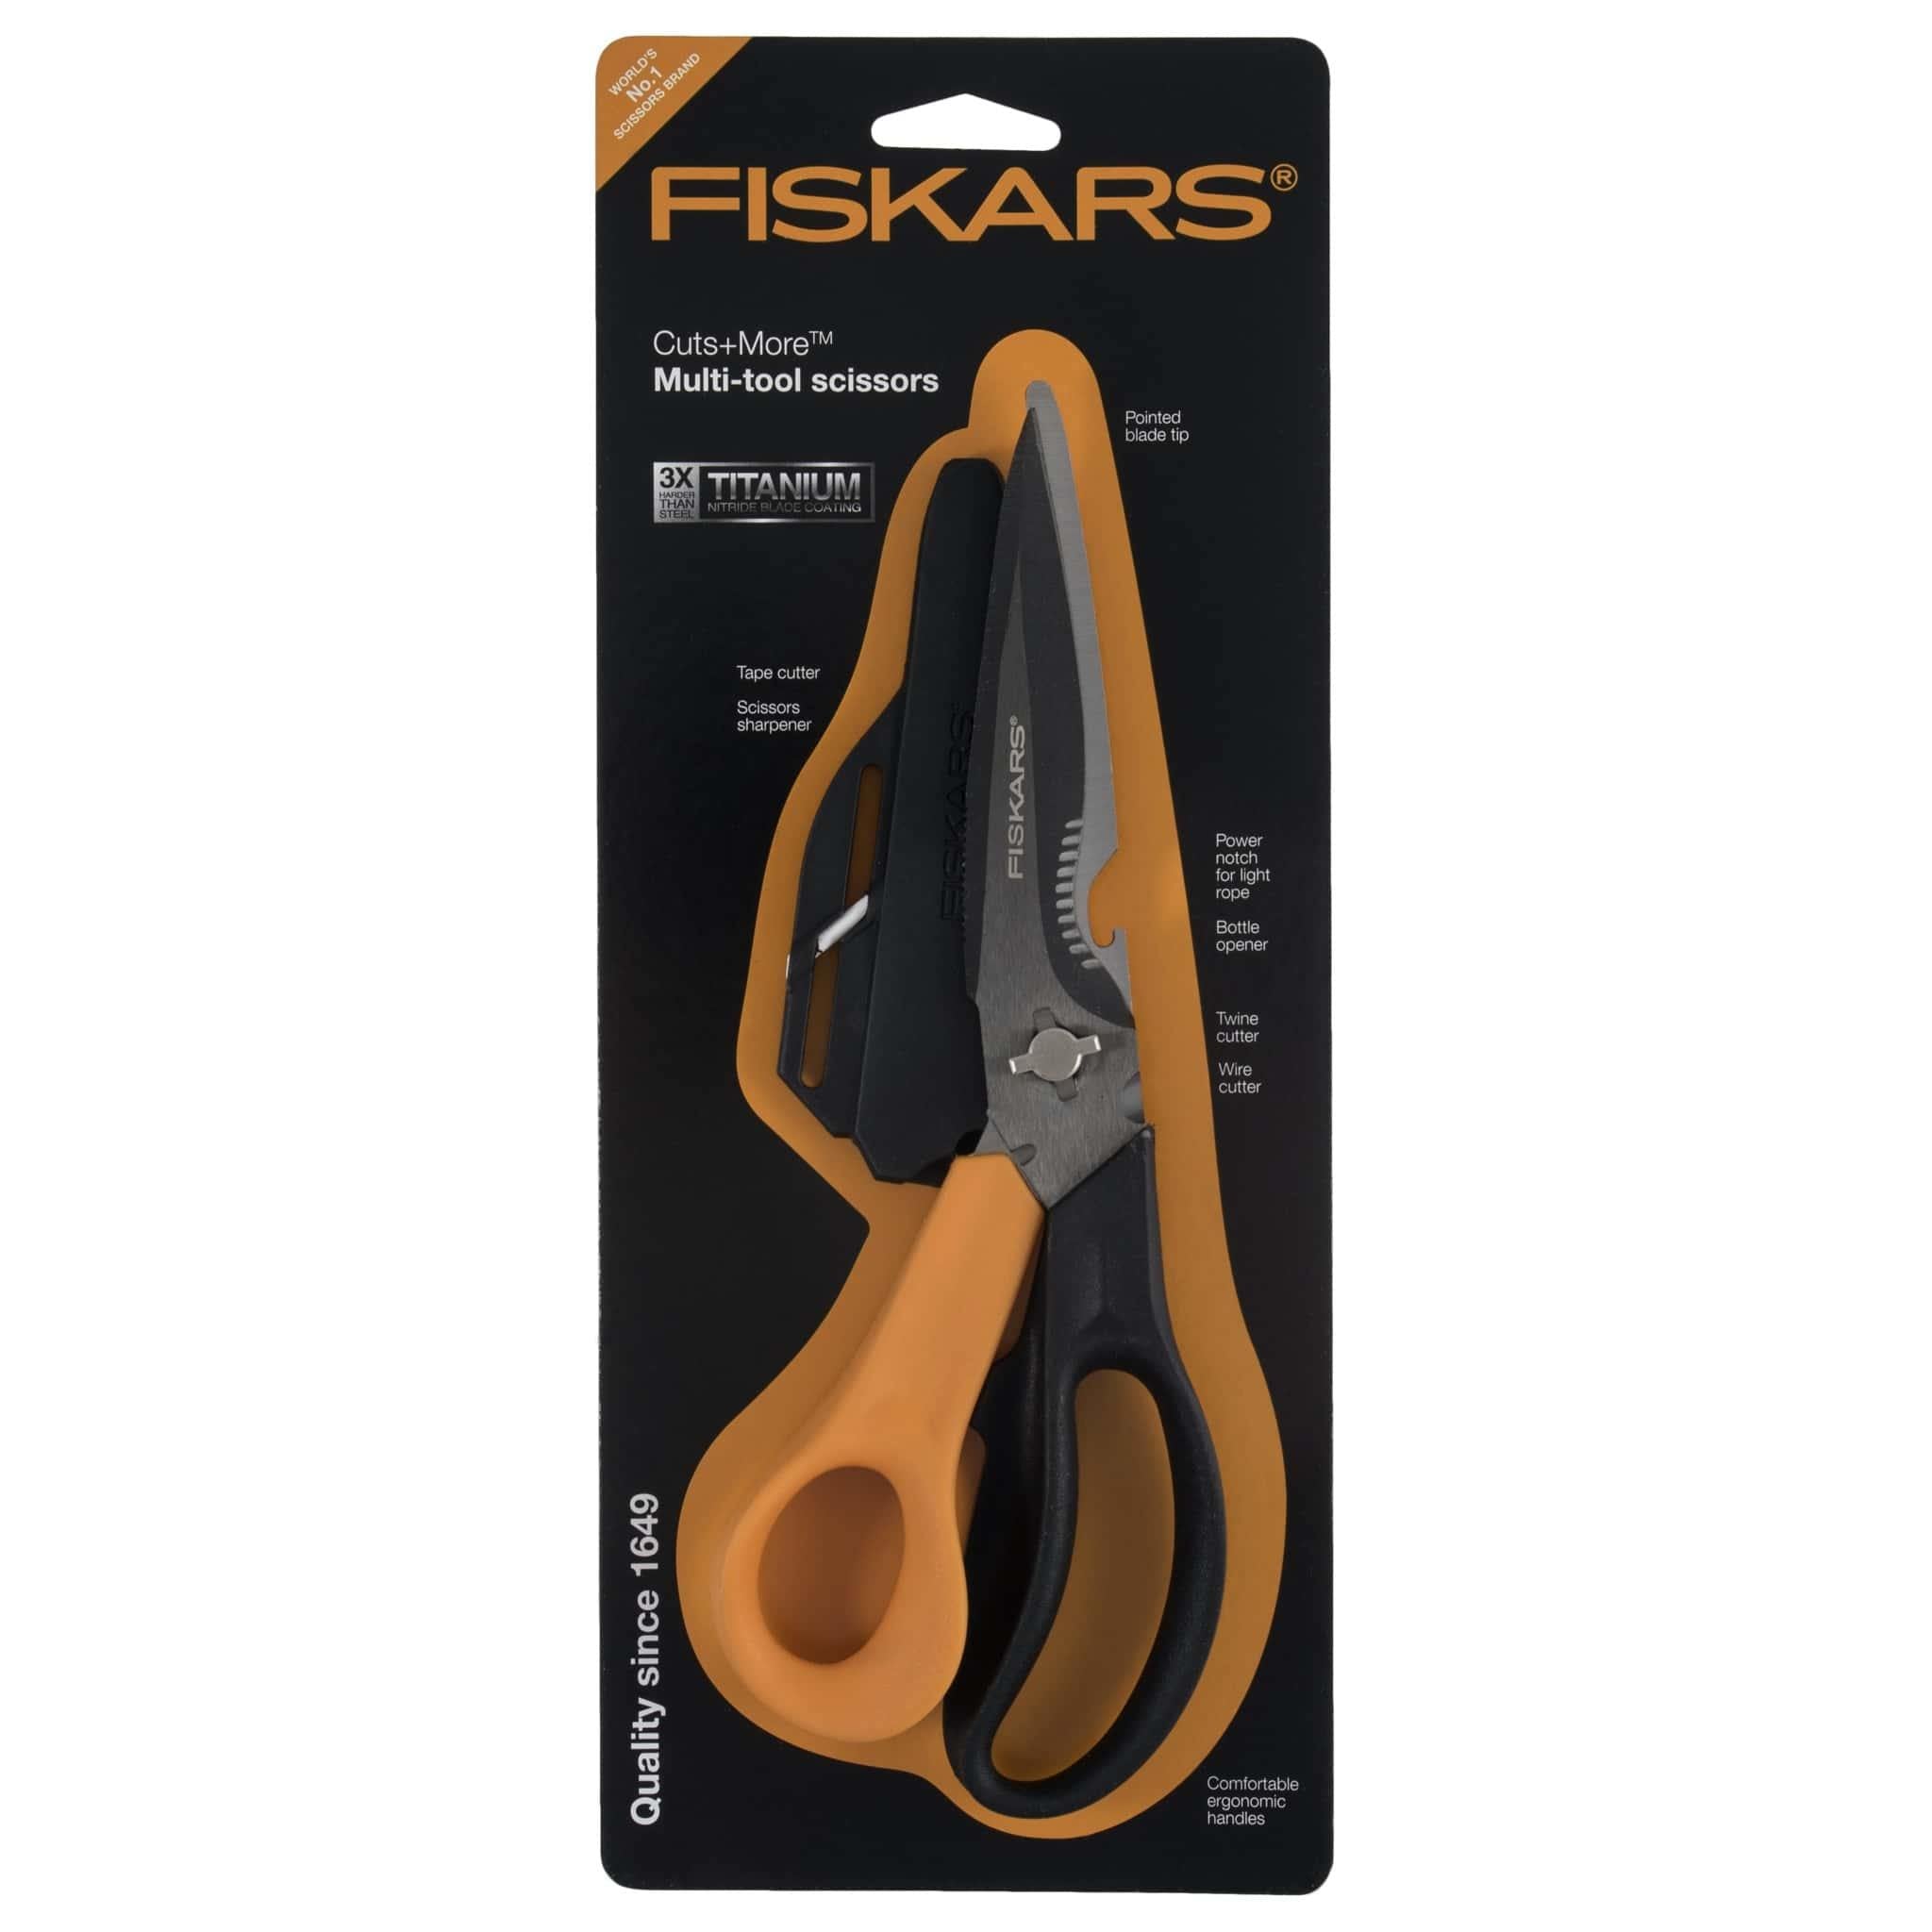 Fiskars Multifunction Ultimate Cuts+More™ (23cm) - Woolshop.co.uk